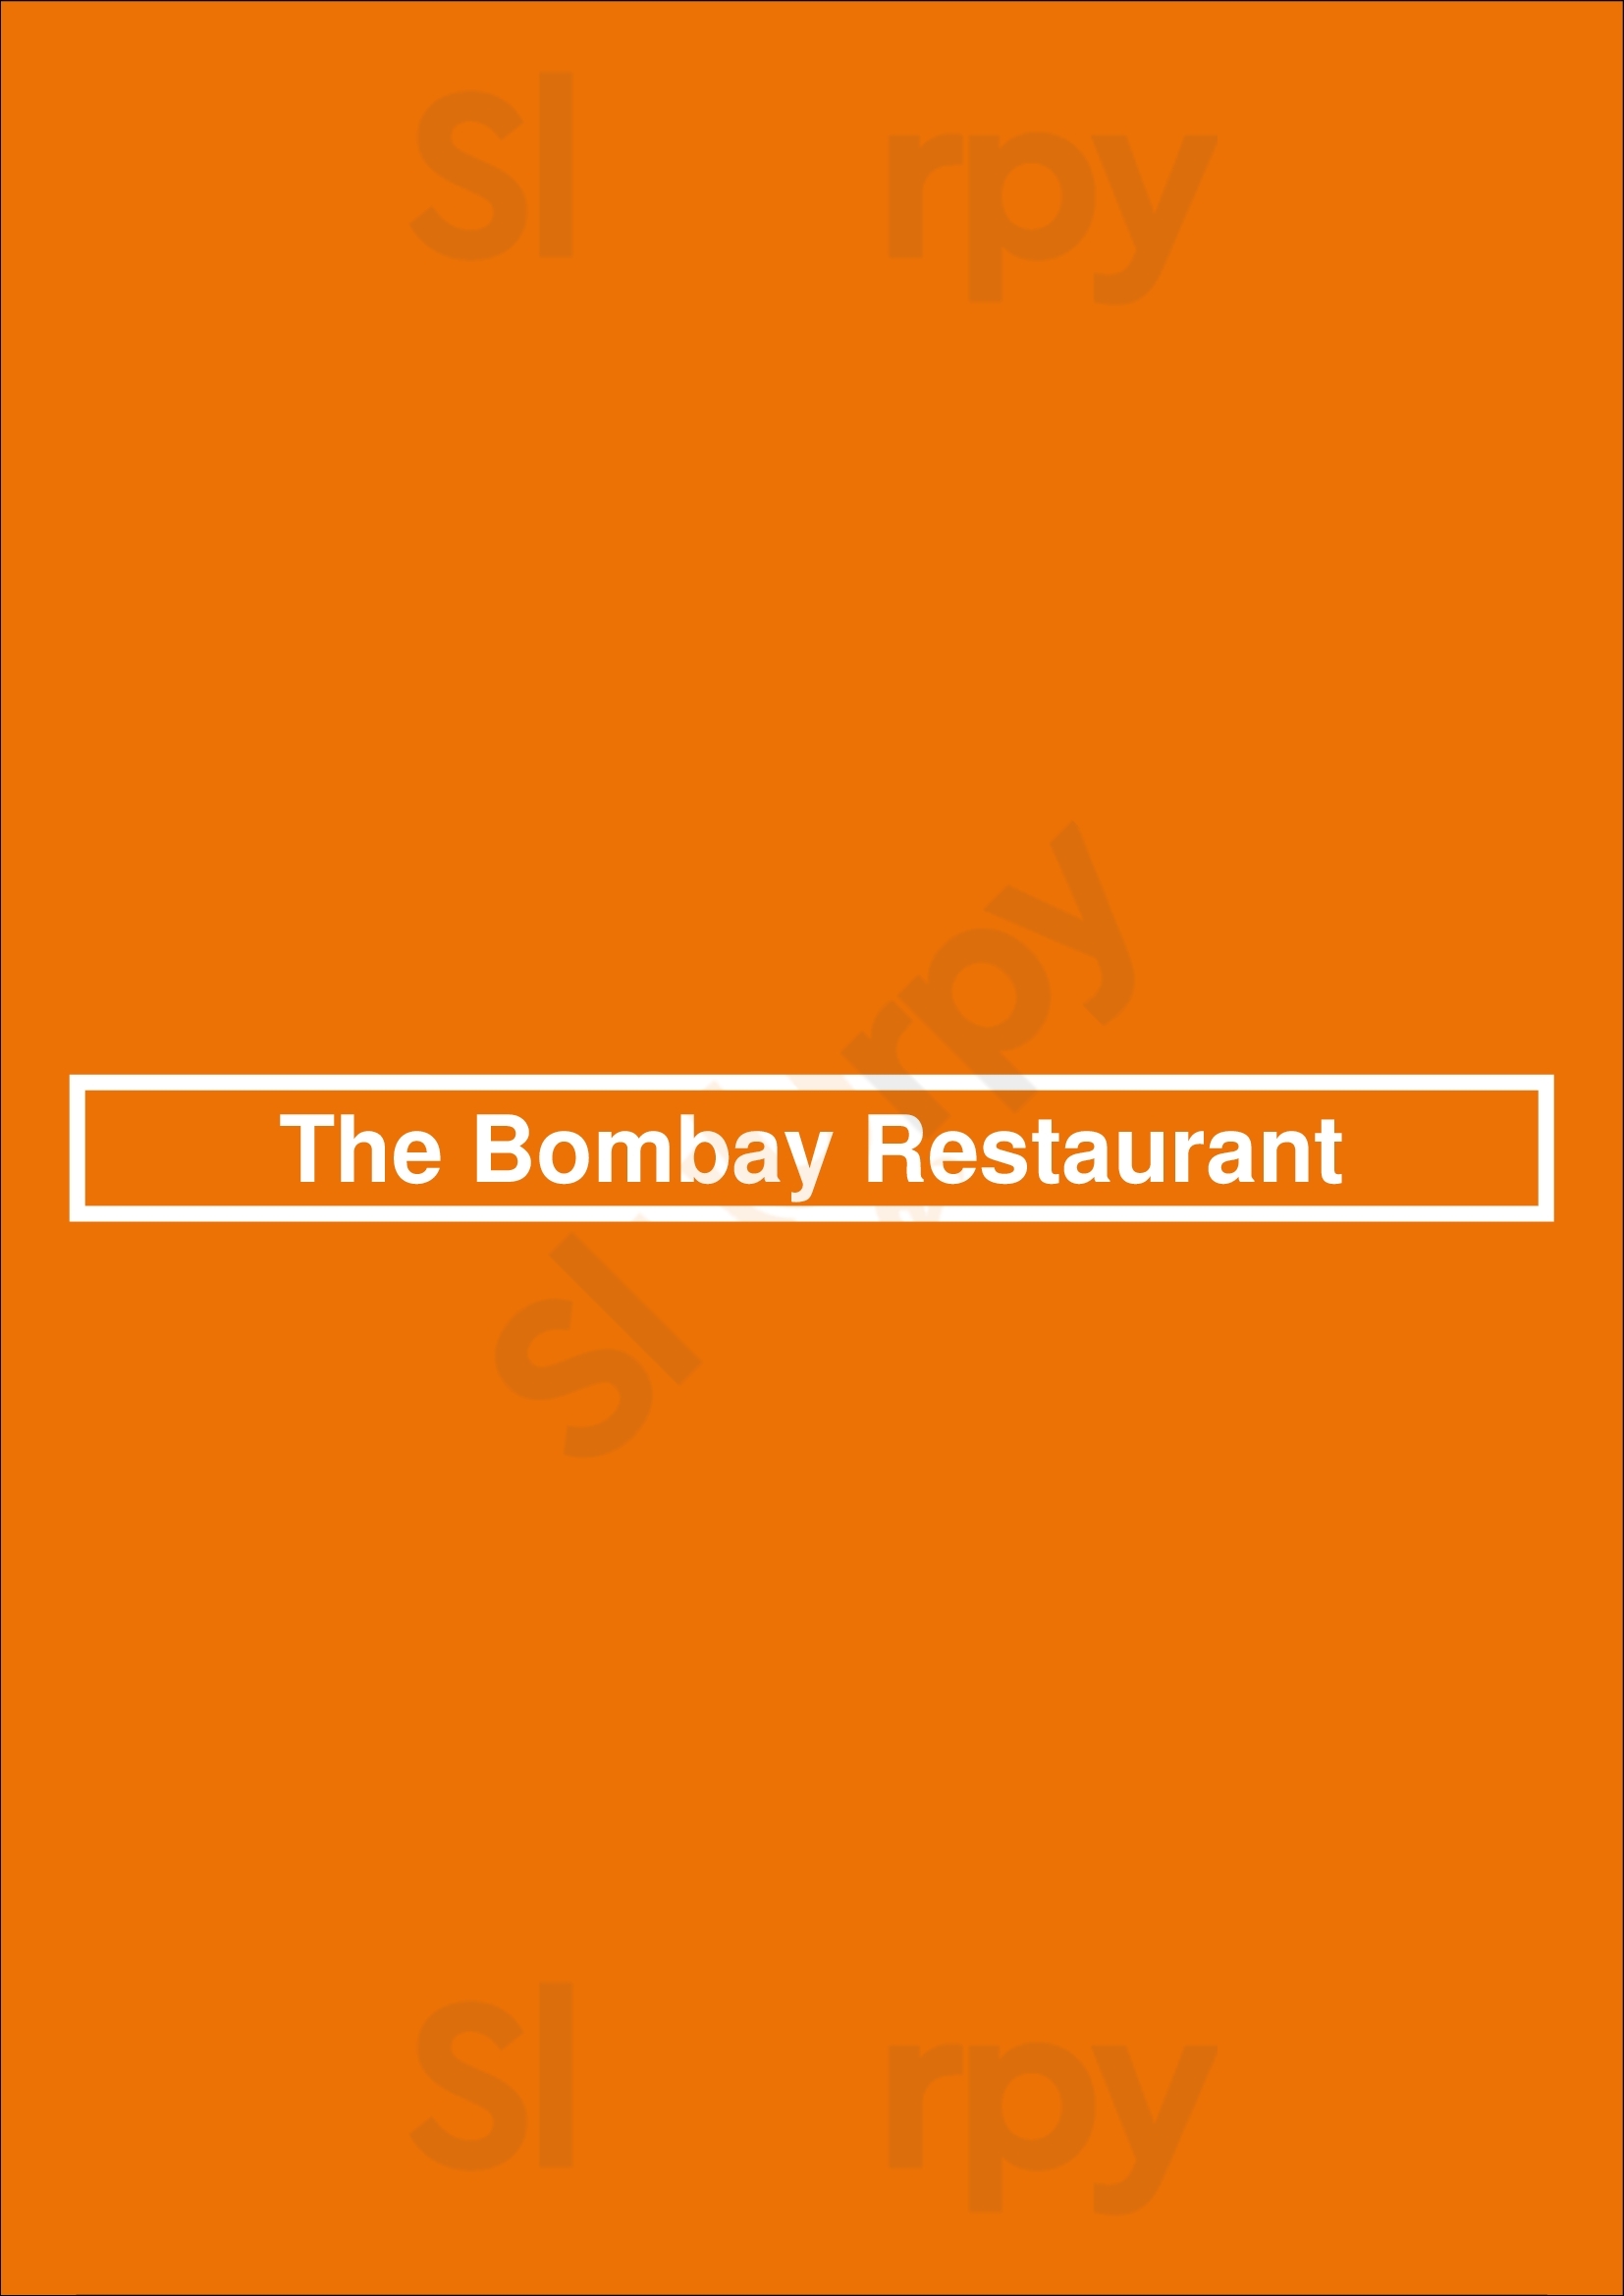 The Bombay Restaurant Port Coquitlam Menu - 1